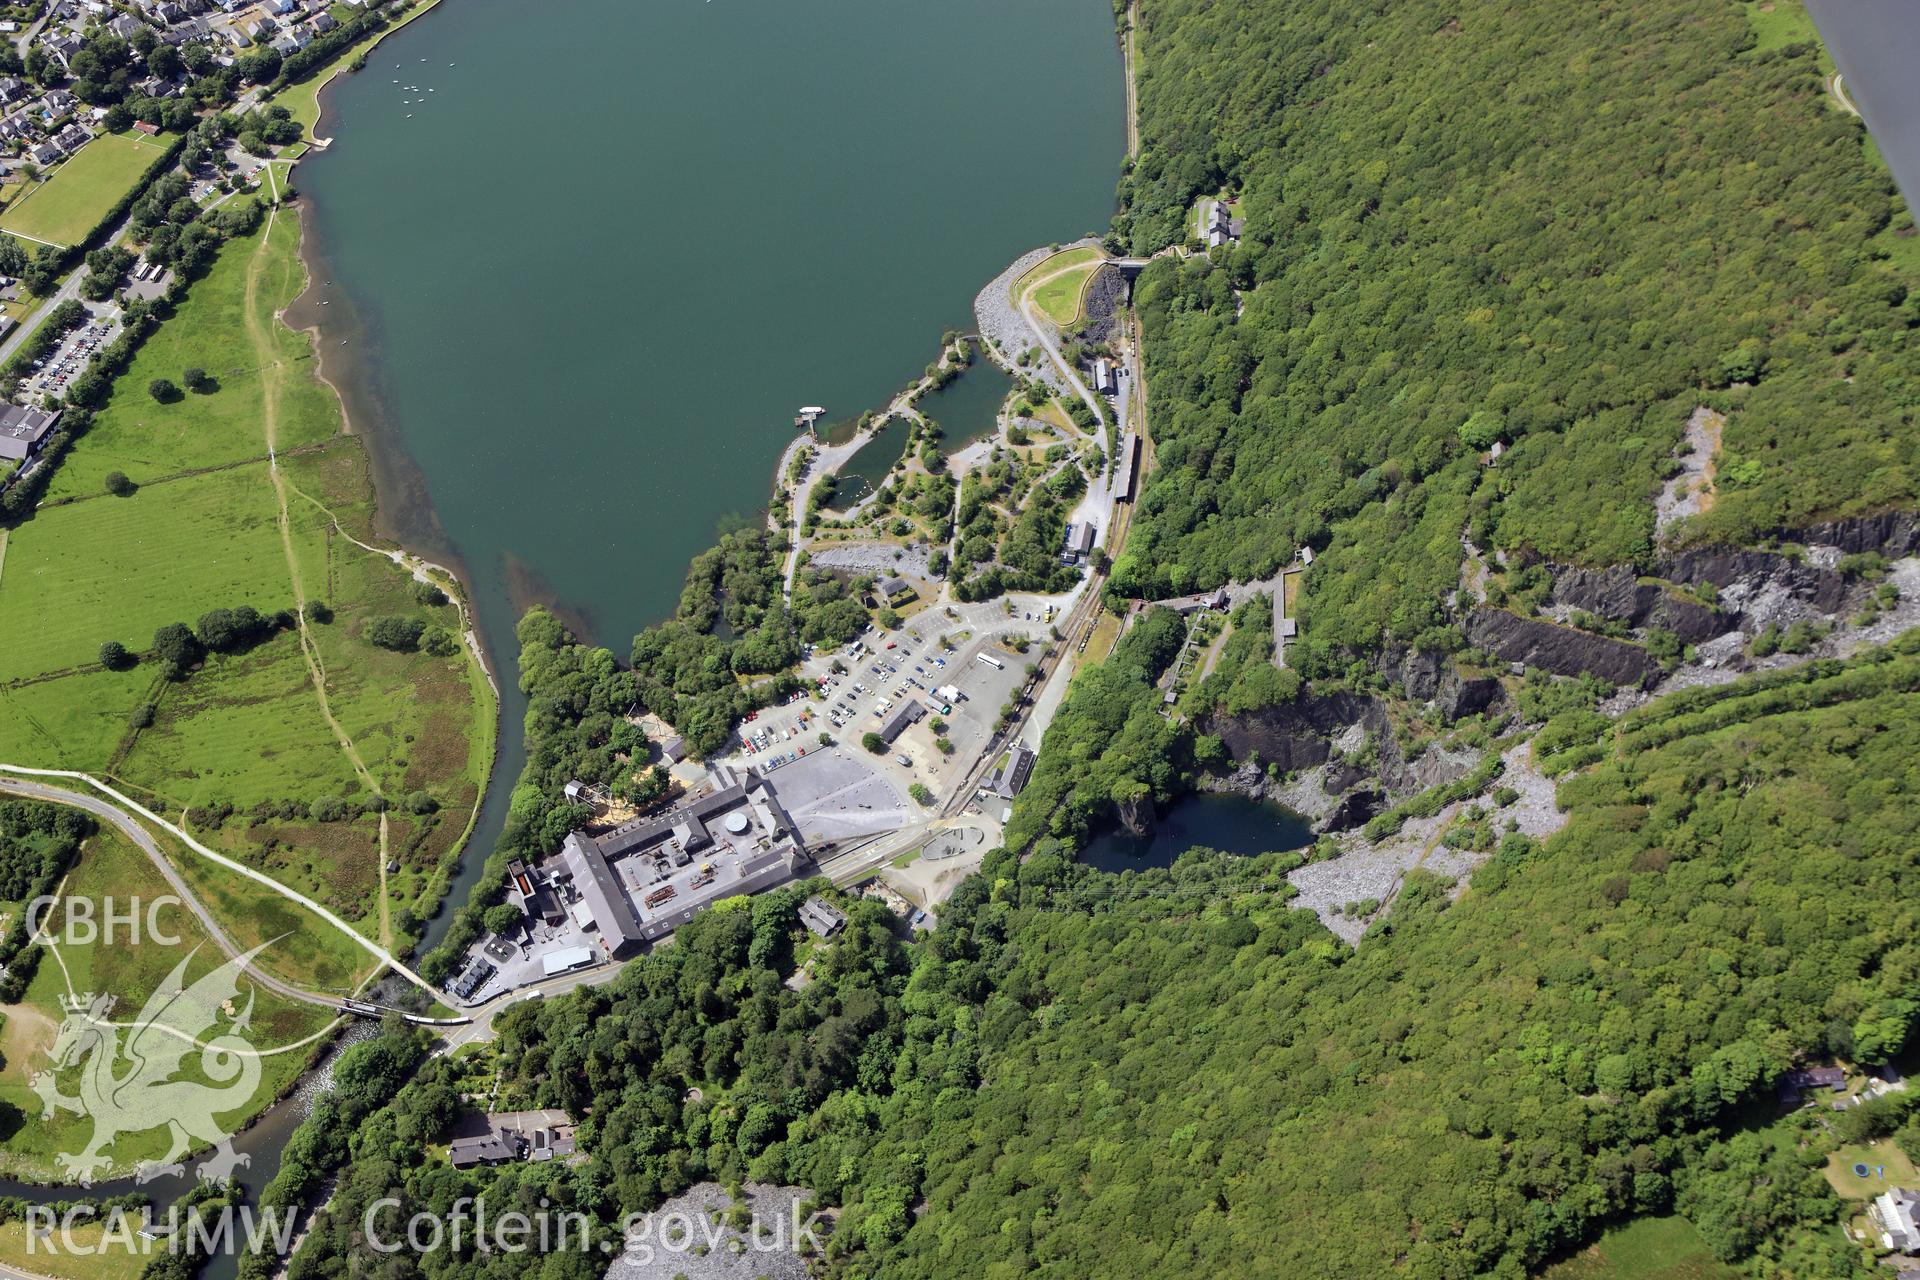 RCAHMW colour oblique aerial photograph of Vivian Slate Quarry. Taken on 16 June 2009 by Toby Driver